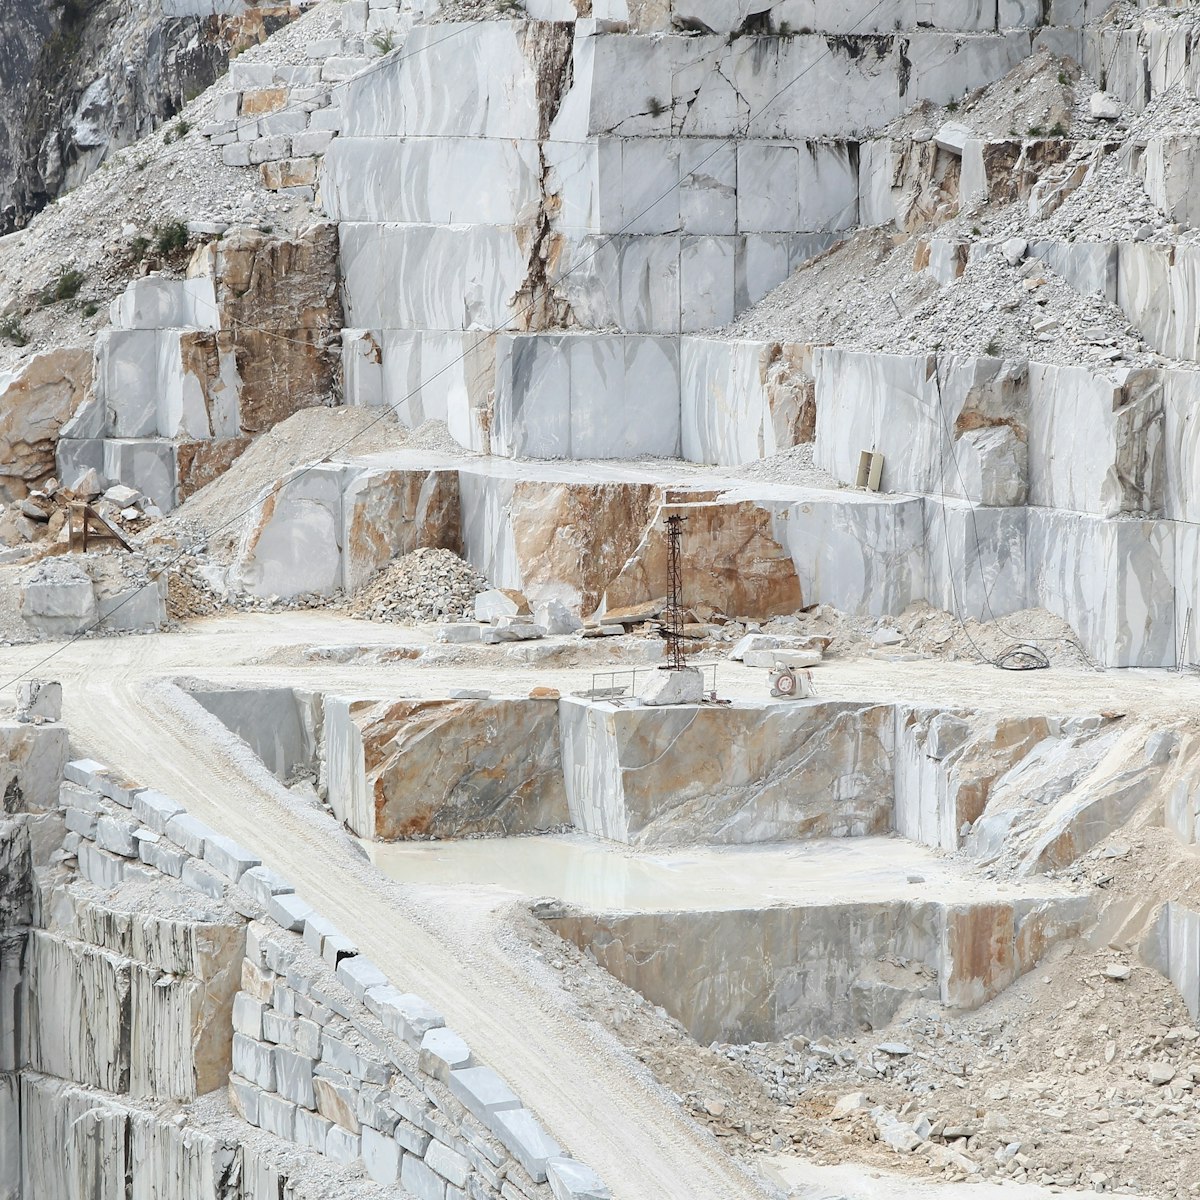 Marble quarry in Fantiscritti valley, Carrara, Italy.